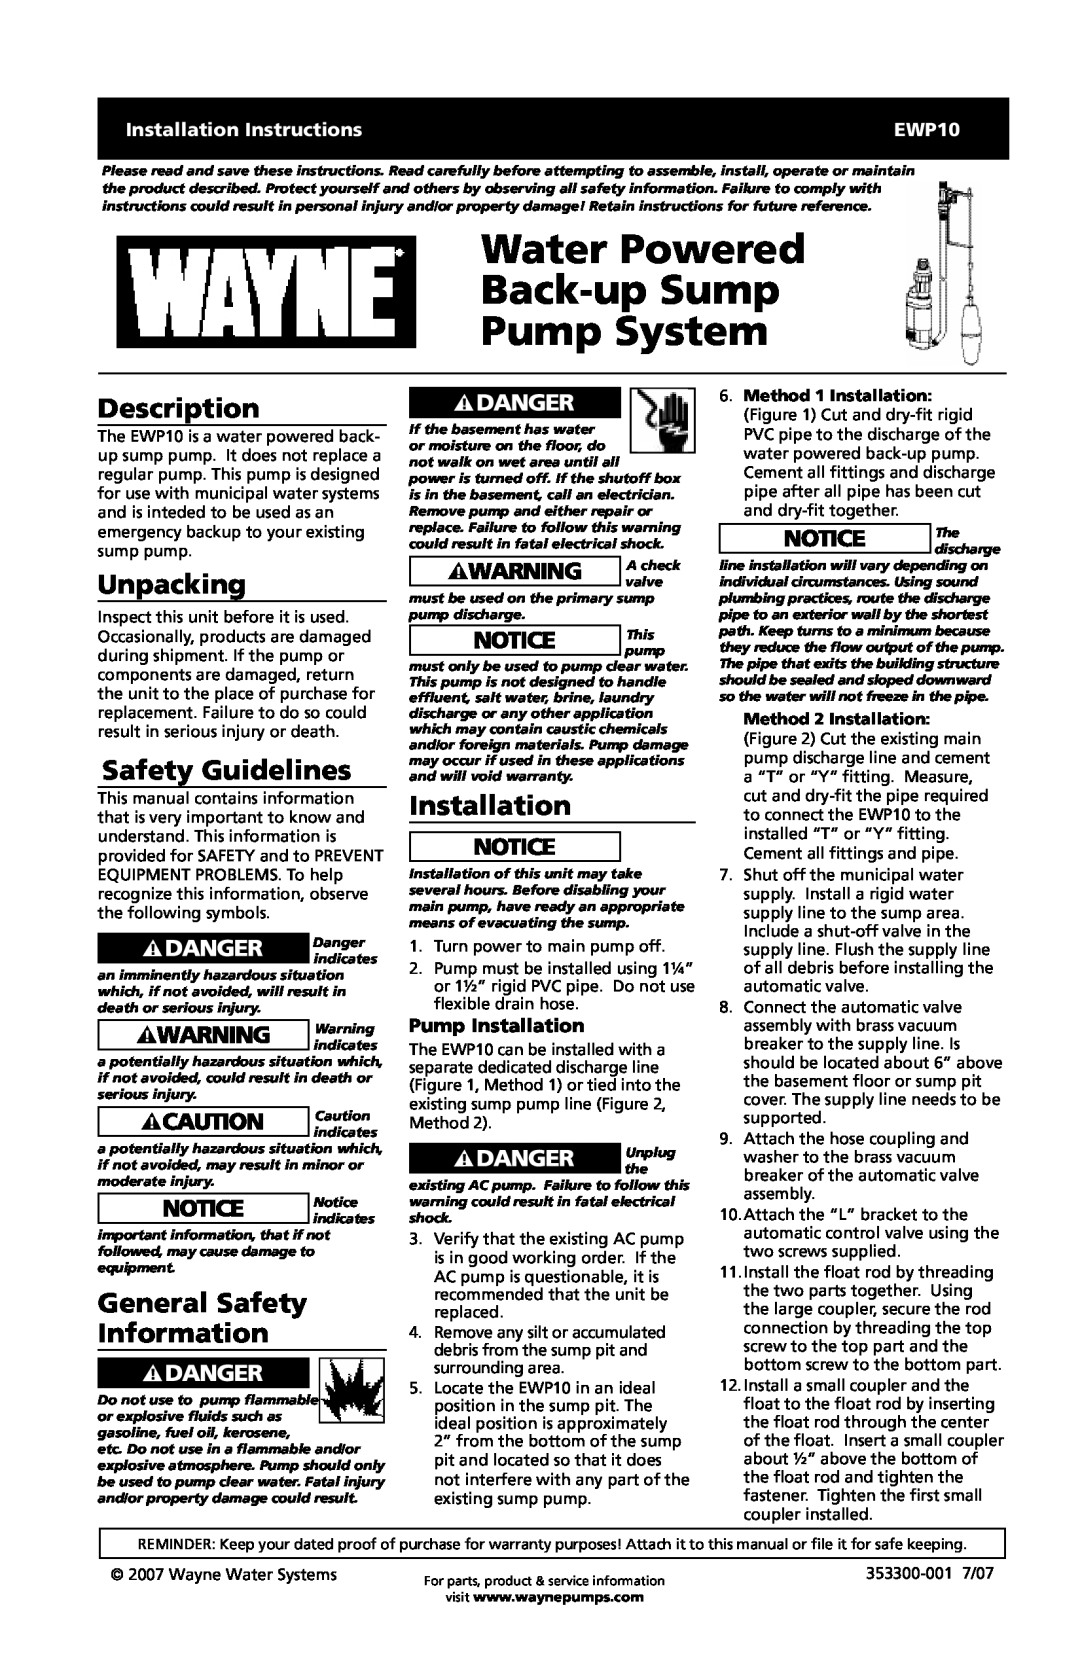 Wayne EWP10 installation instructions Description, Unpacking, Safety Guidelines, General Safety Information, Installation 